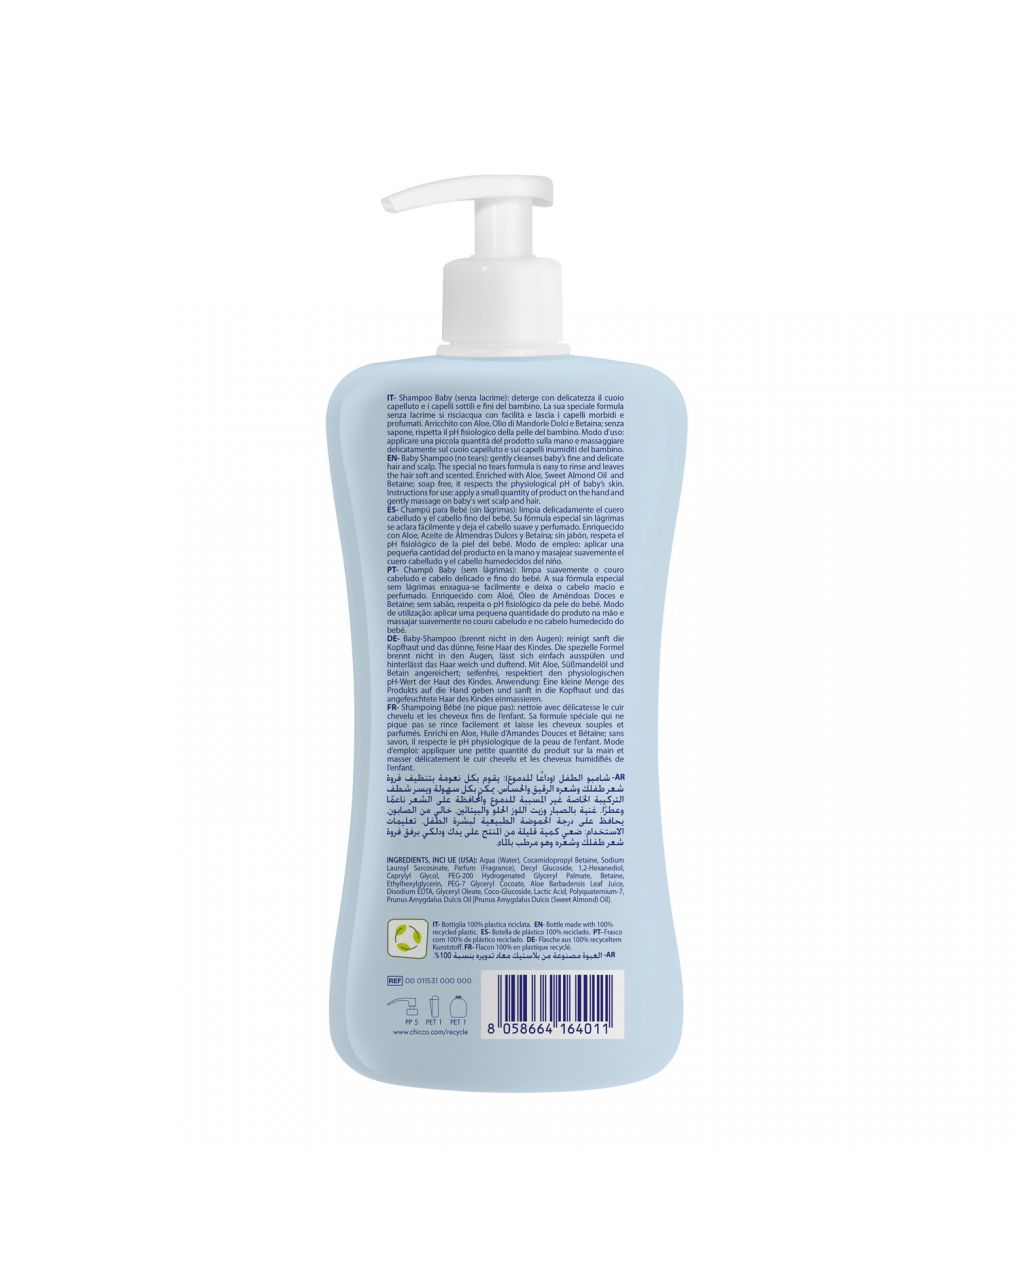 Baby shampoo natural sensation 500ml - chicco - Chicco